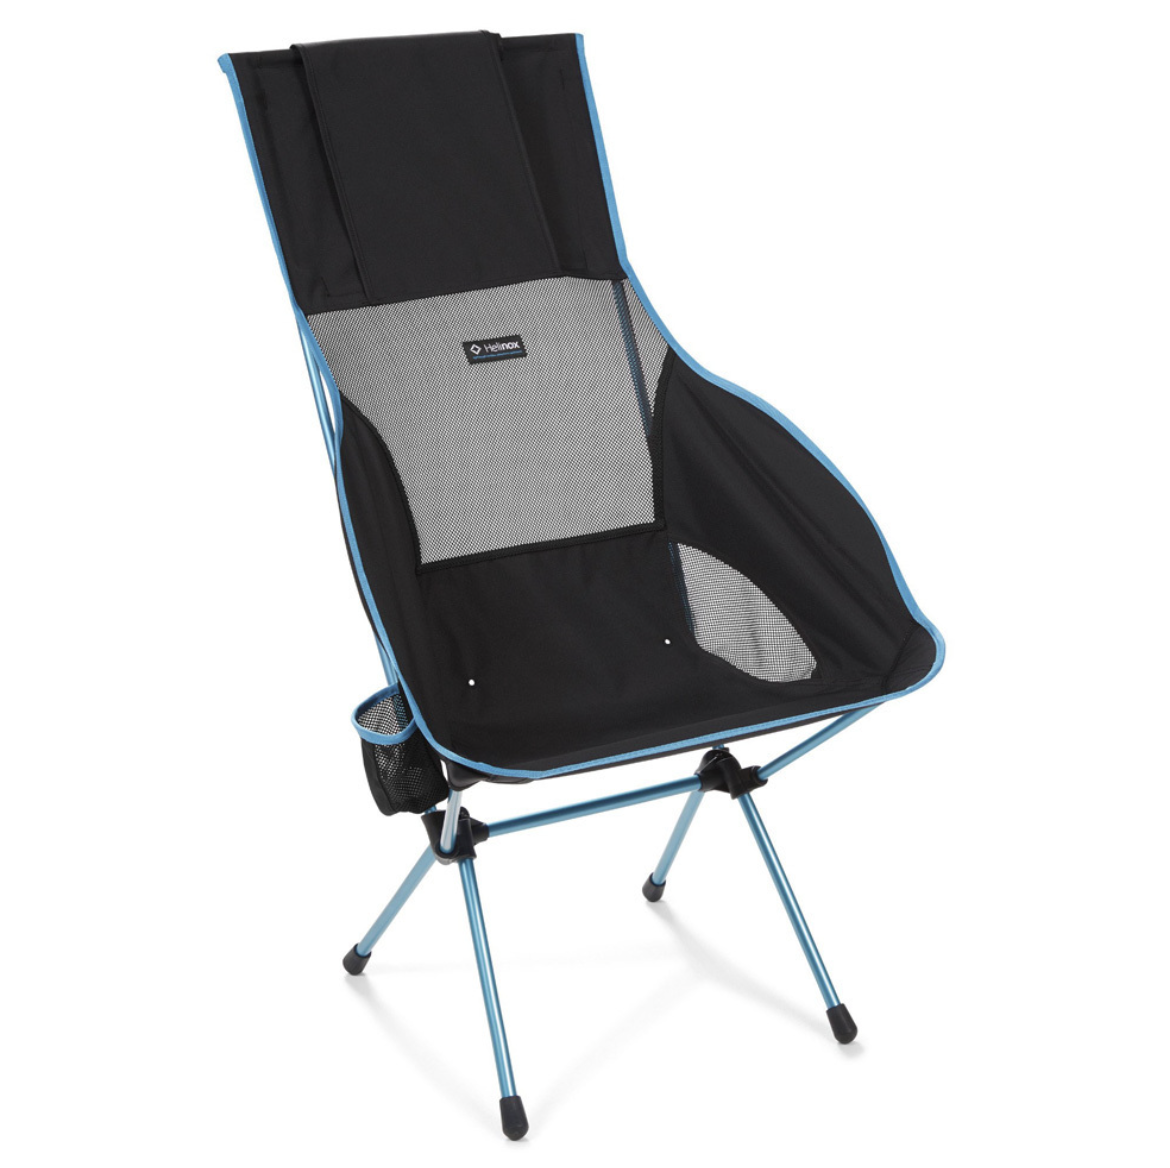 Helinox Savannah Camping Chair - Black/Blue